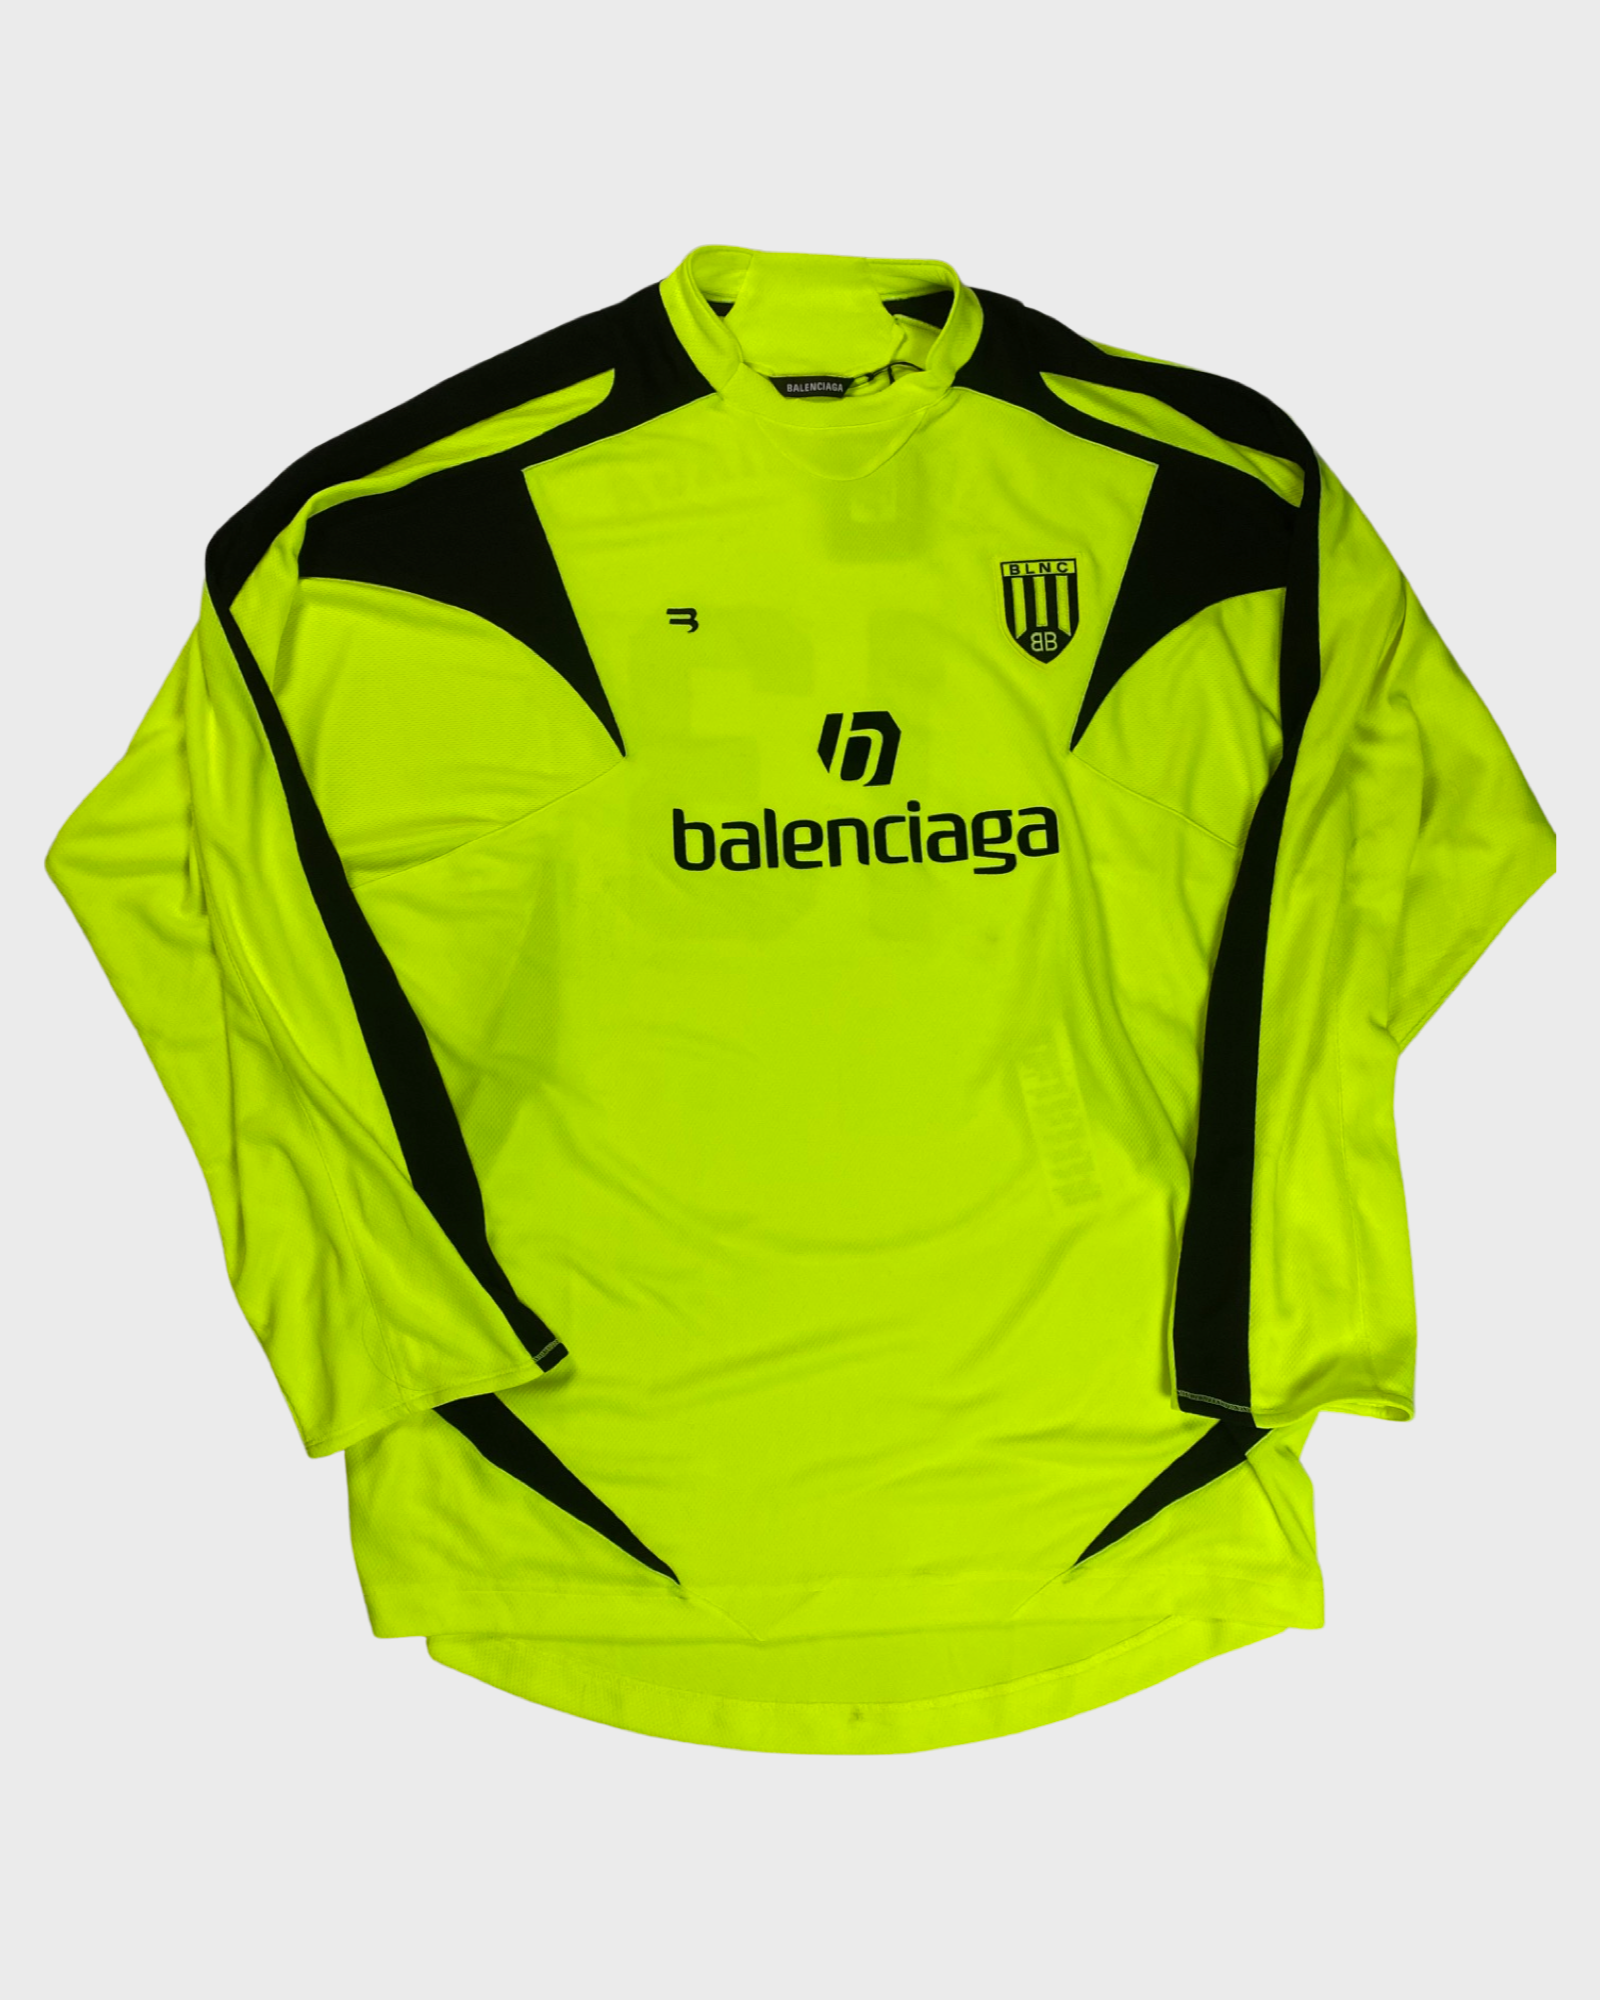 Balenciaga Soccer Football Jersey longsleeve neon yellow SZ:XS|S|M 